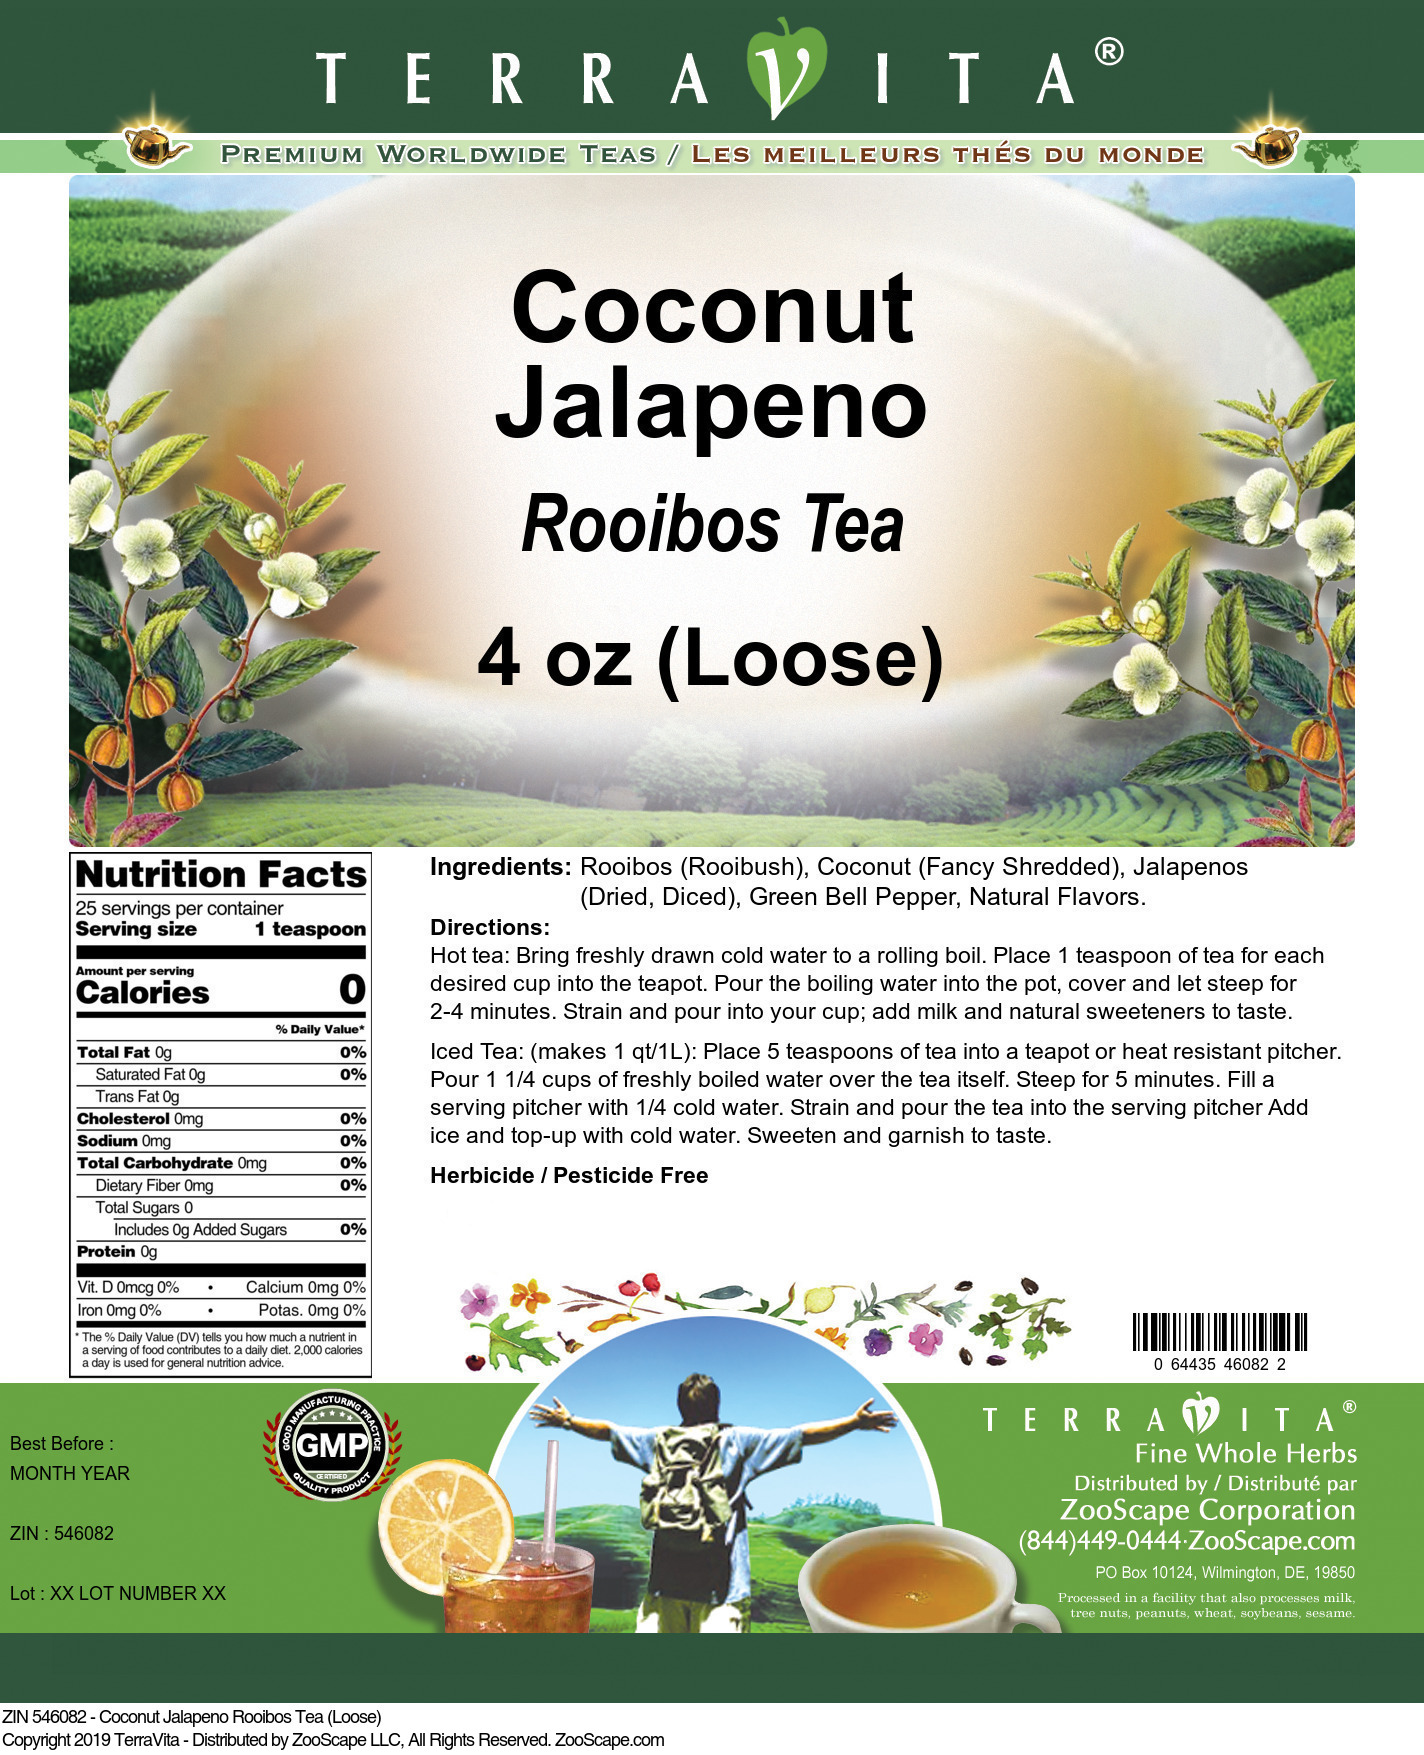 Coconut Jalapeno Rooibos Tea (Loose) - Label